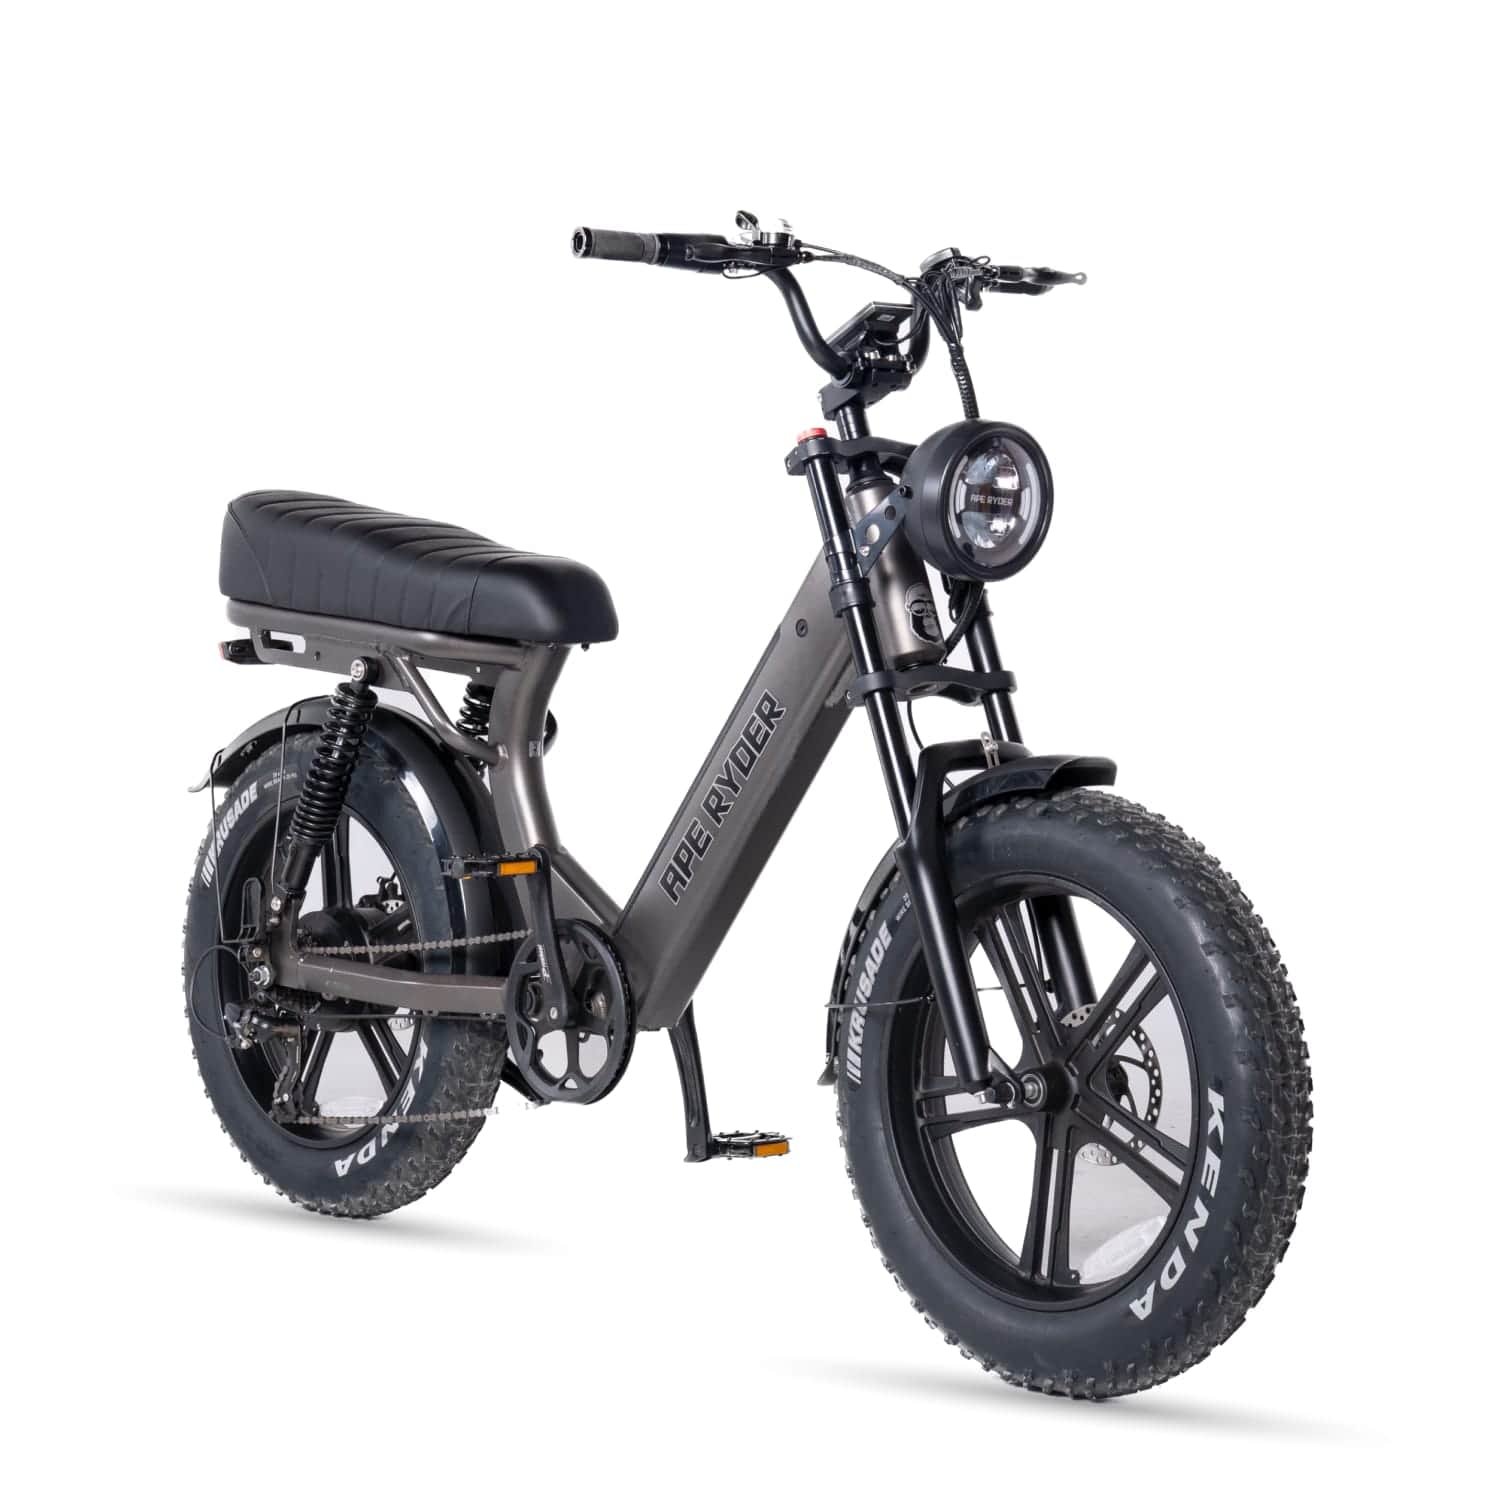 Ape Ryder The Gibbon Electric Bike - Carbon Obsidian | Ape Ryder E-bike